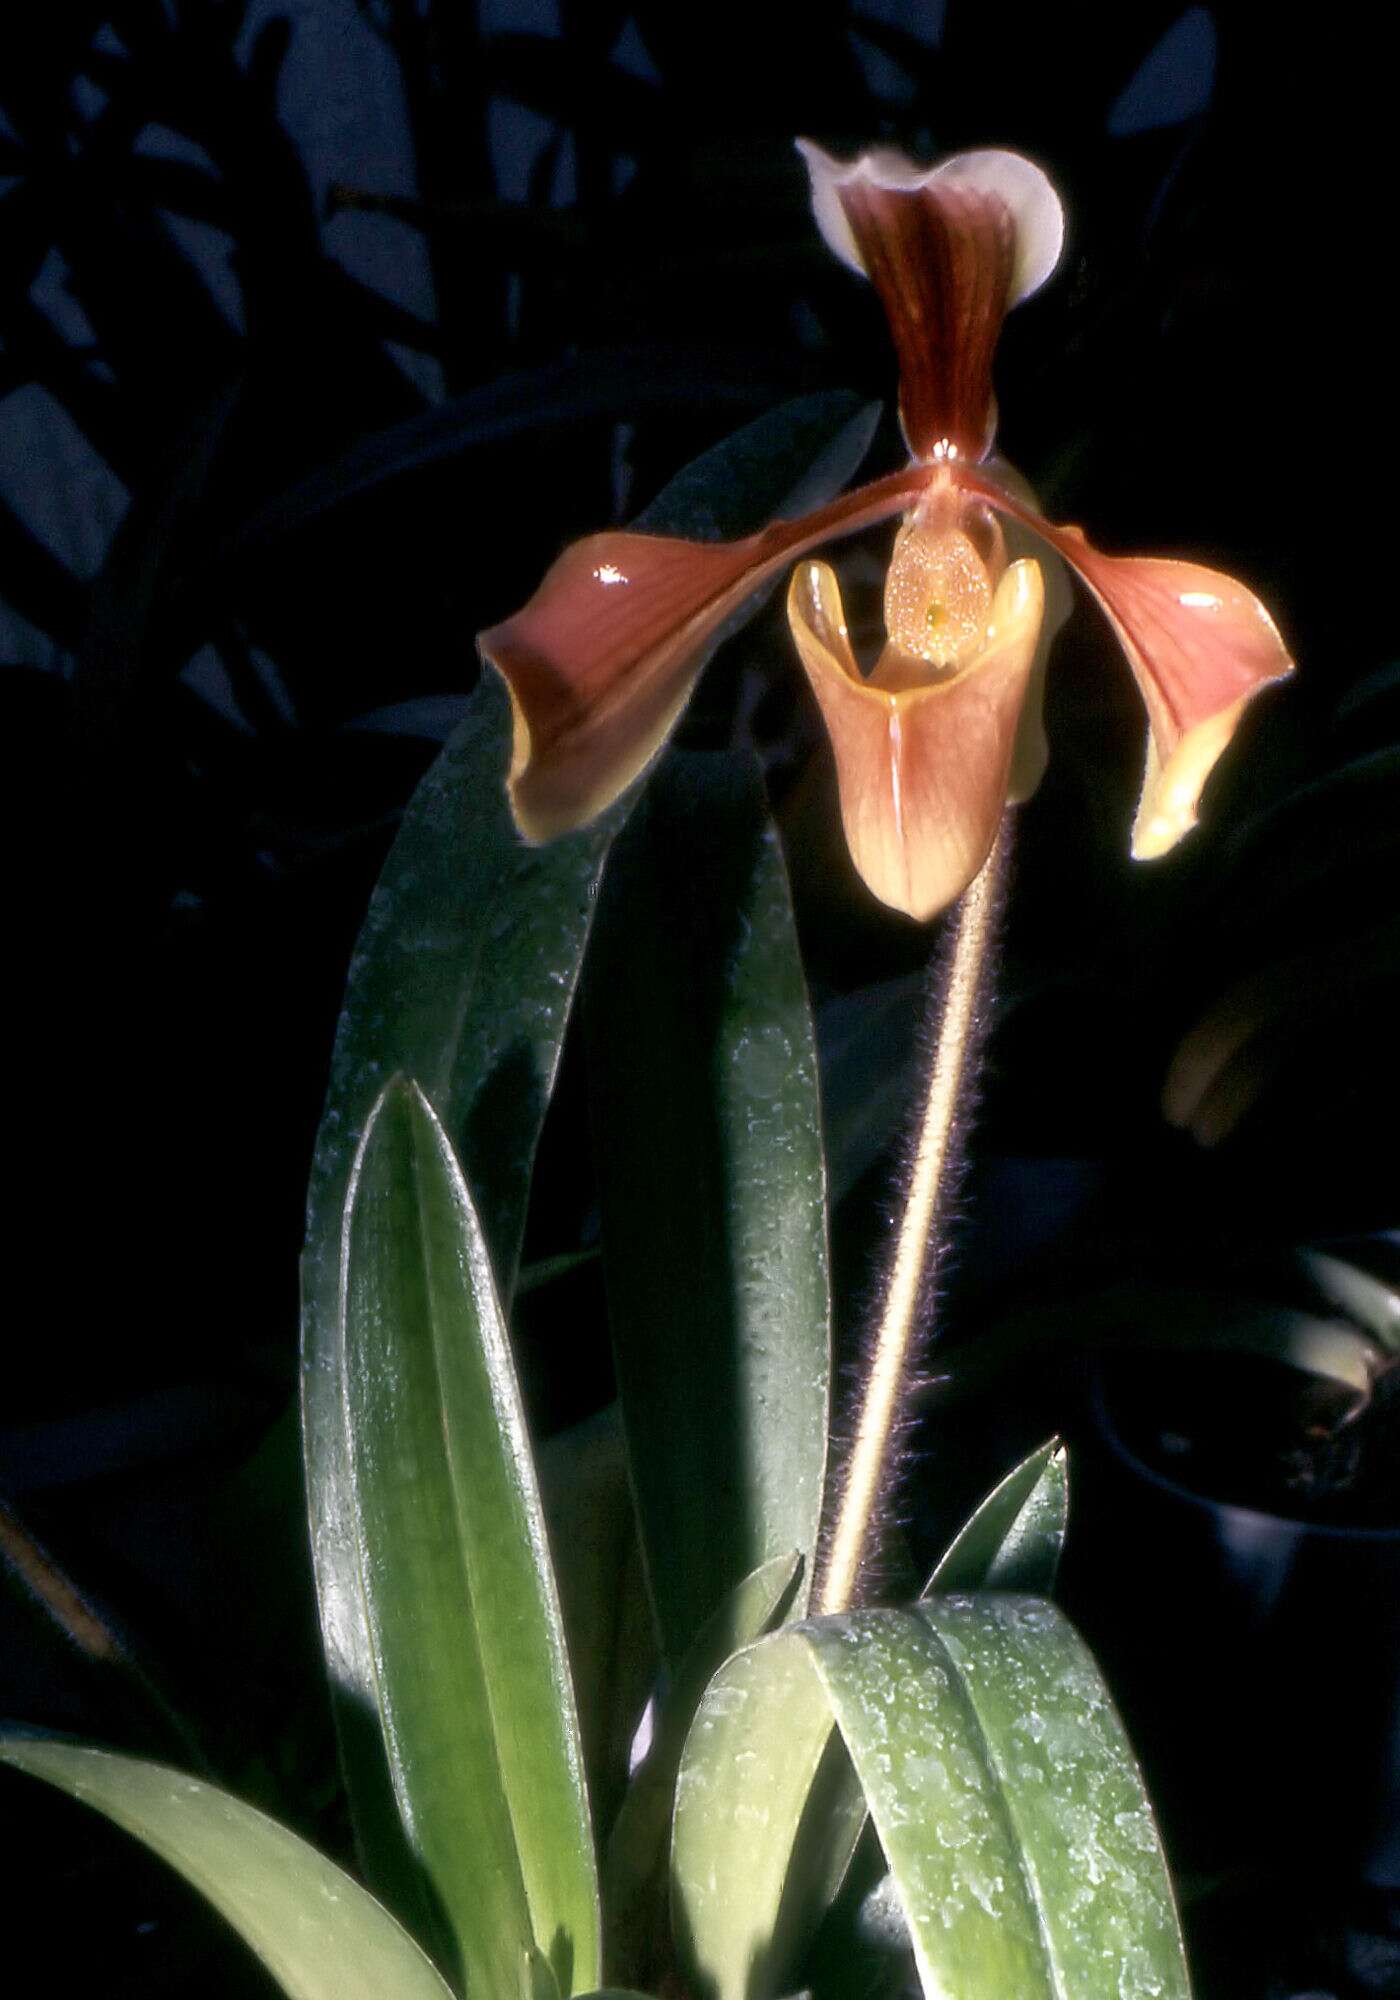 Sivun Paphiopedilum villosum (Lindl.) Stein kuva